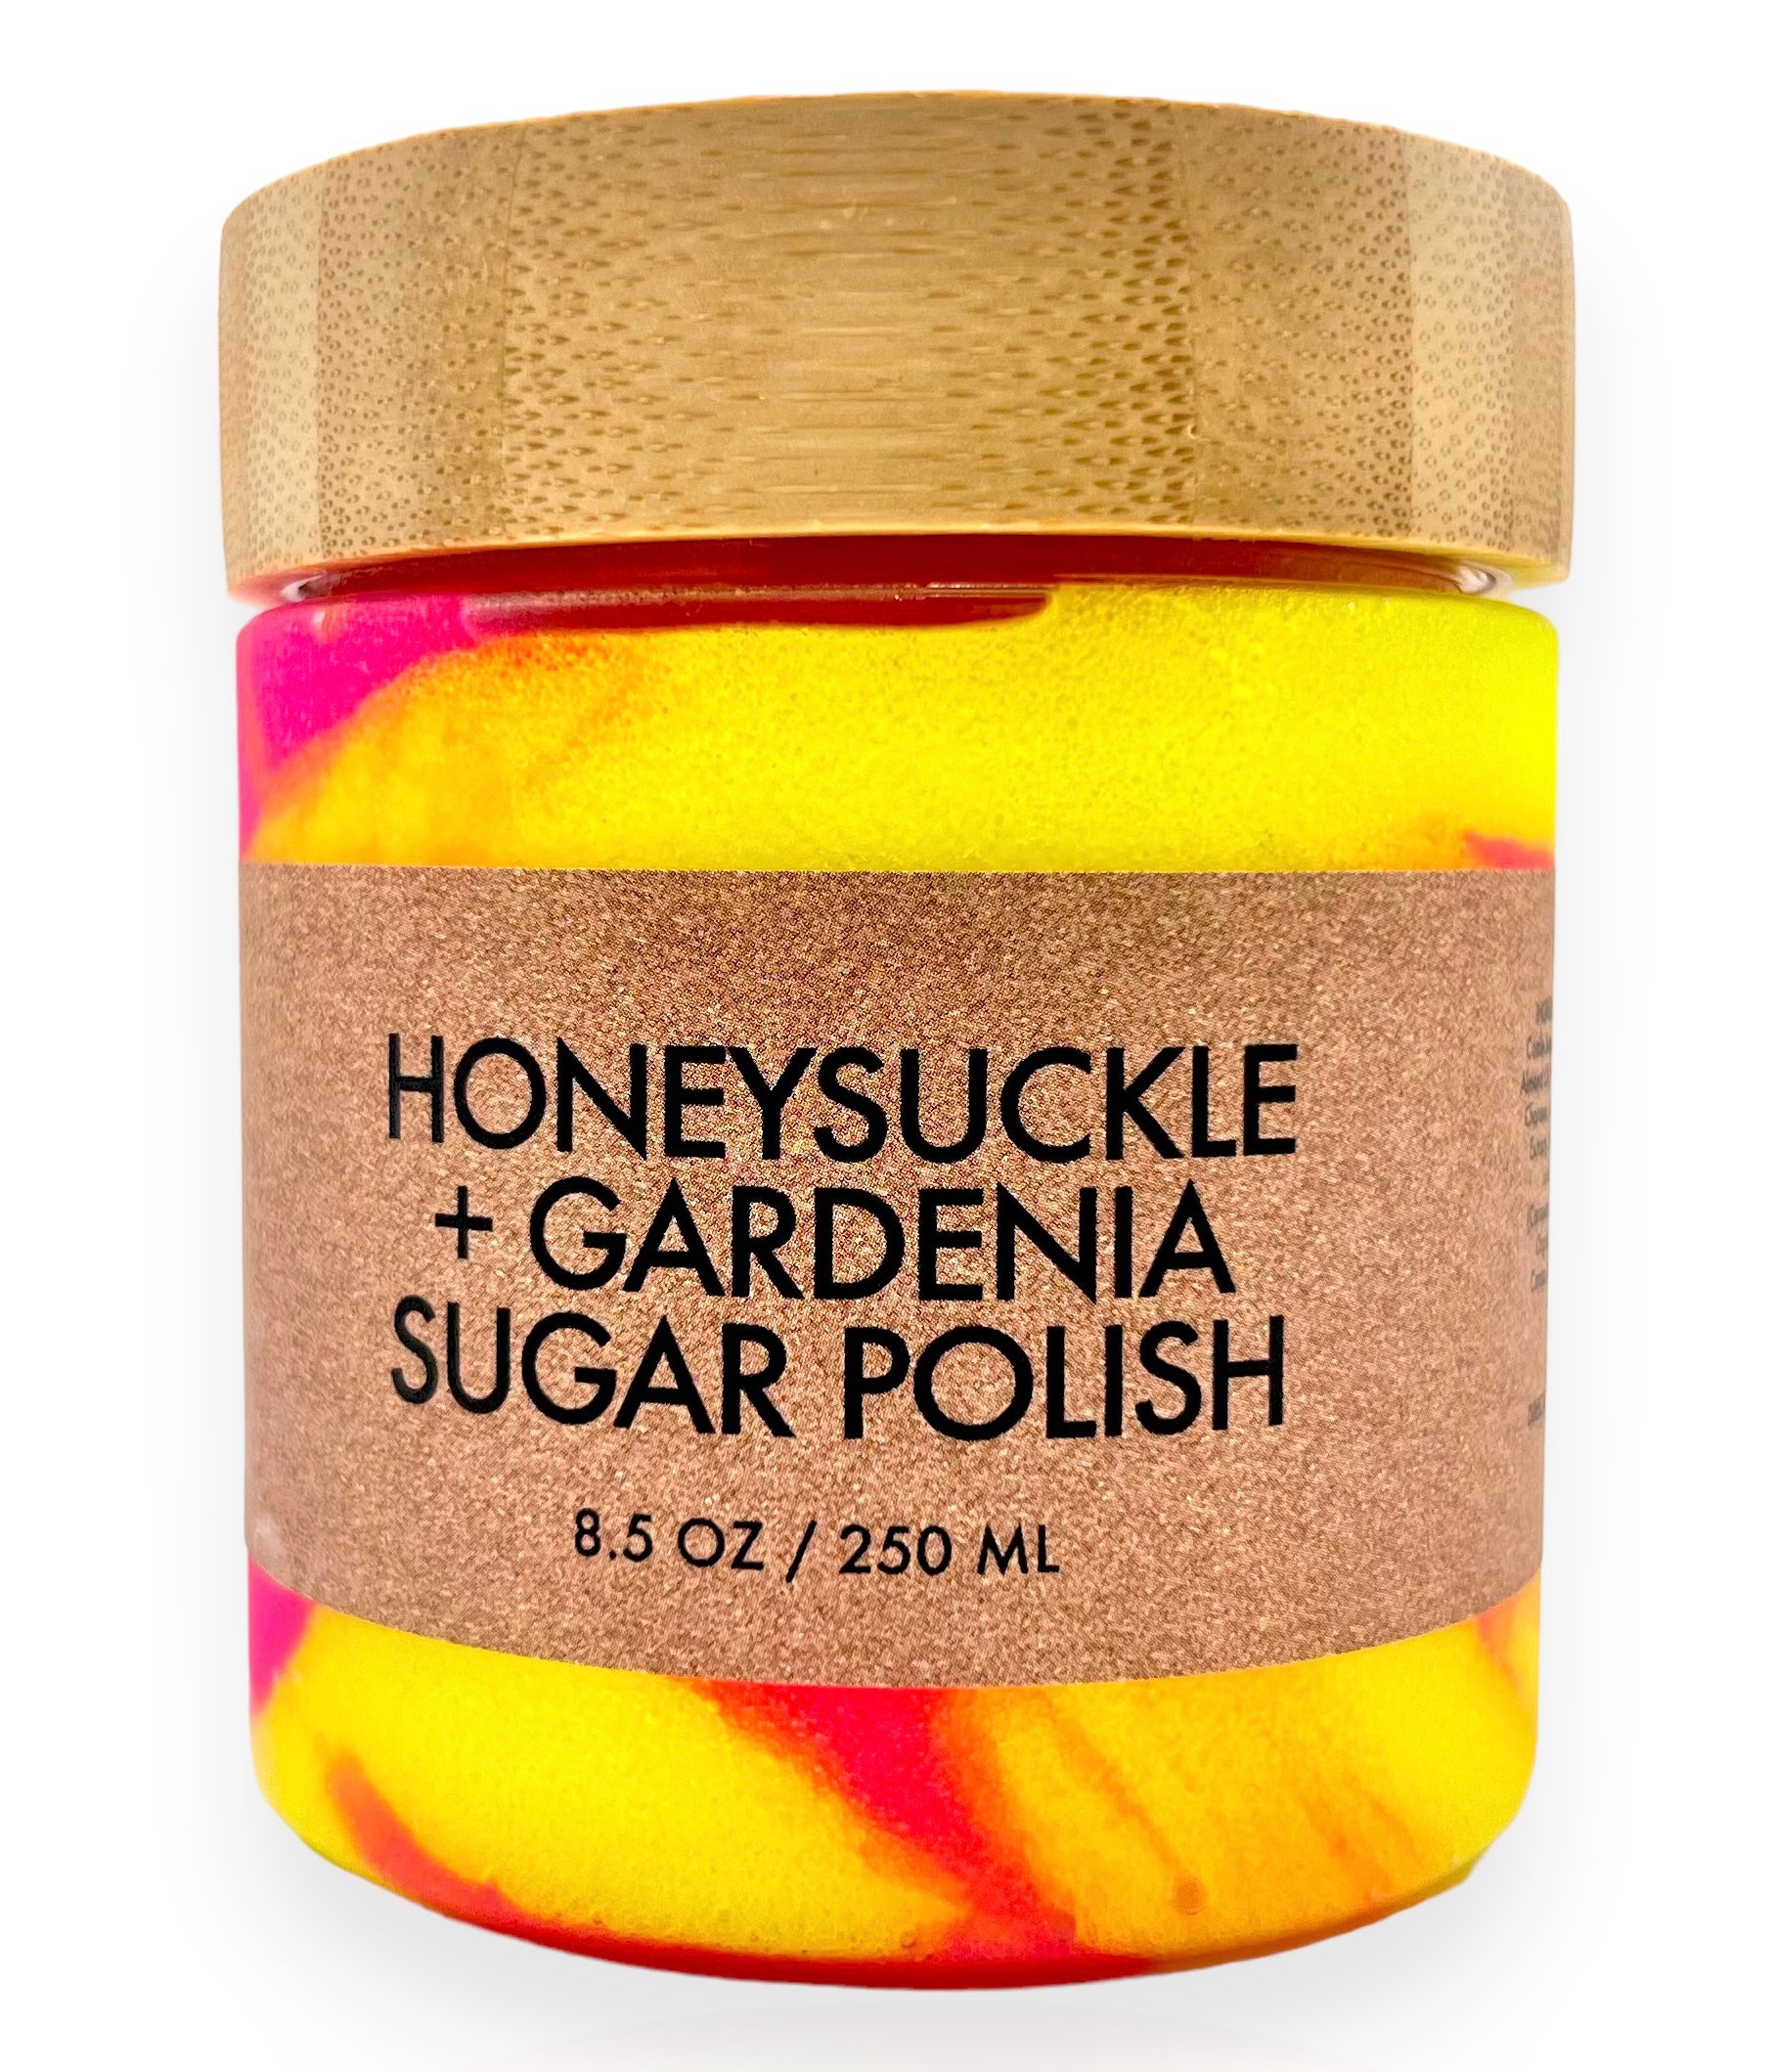 Honeysuckle + Gardenia Foaming Body Polish